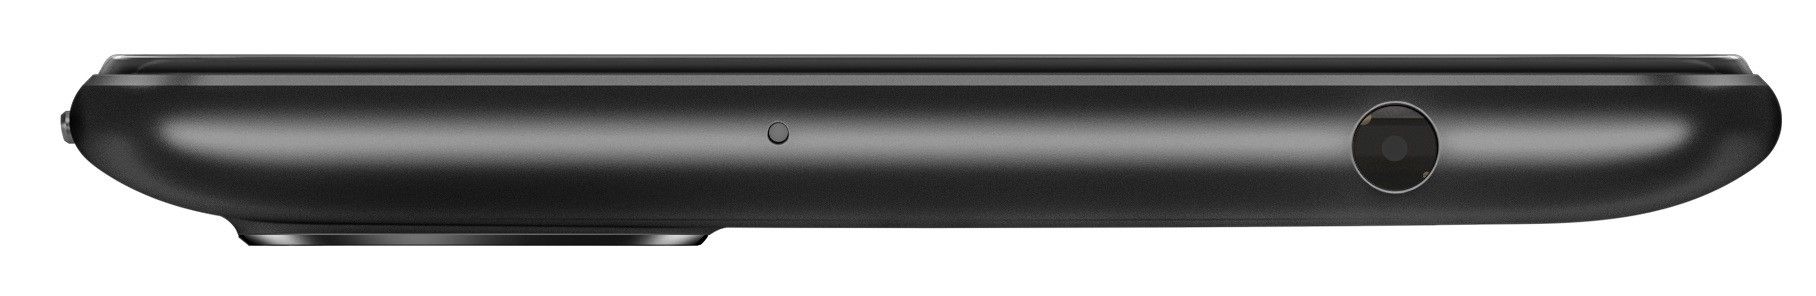 Цена Смартфон Xiaomi Redmi 6A 32Gb Black